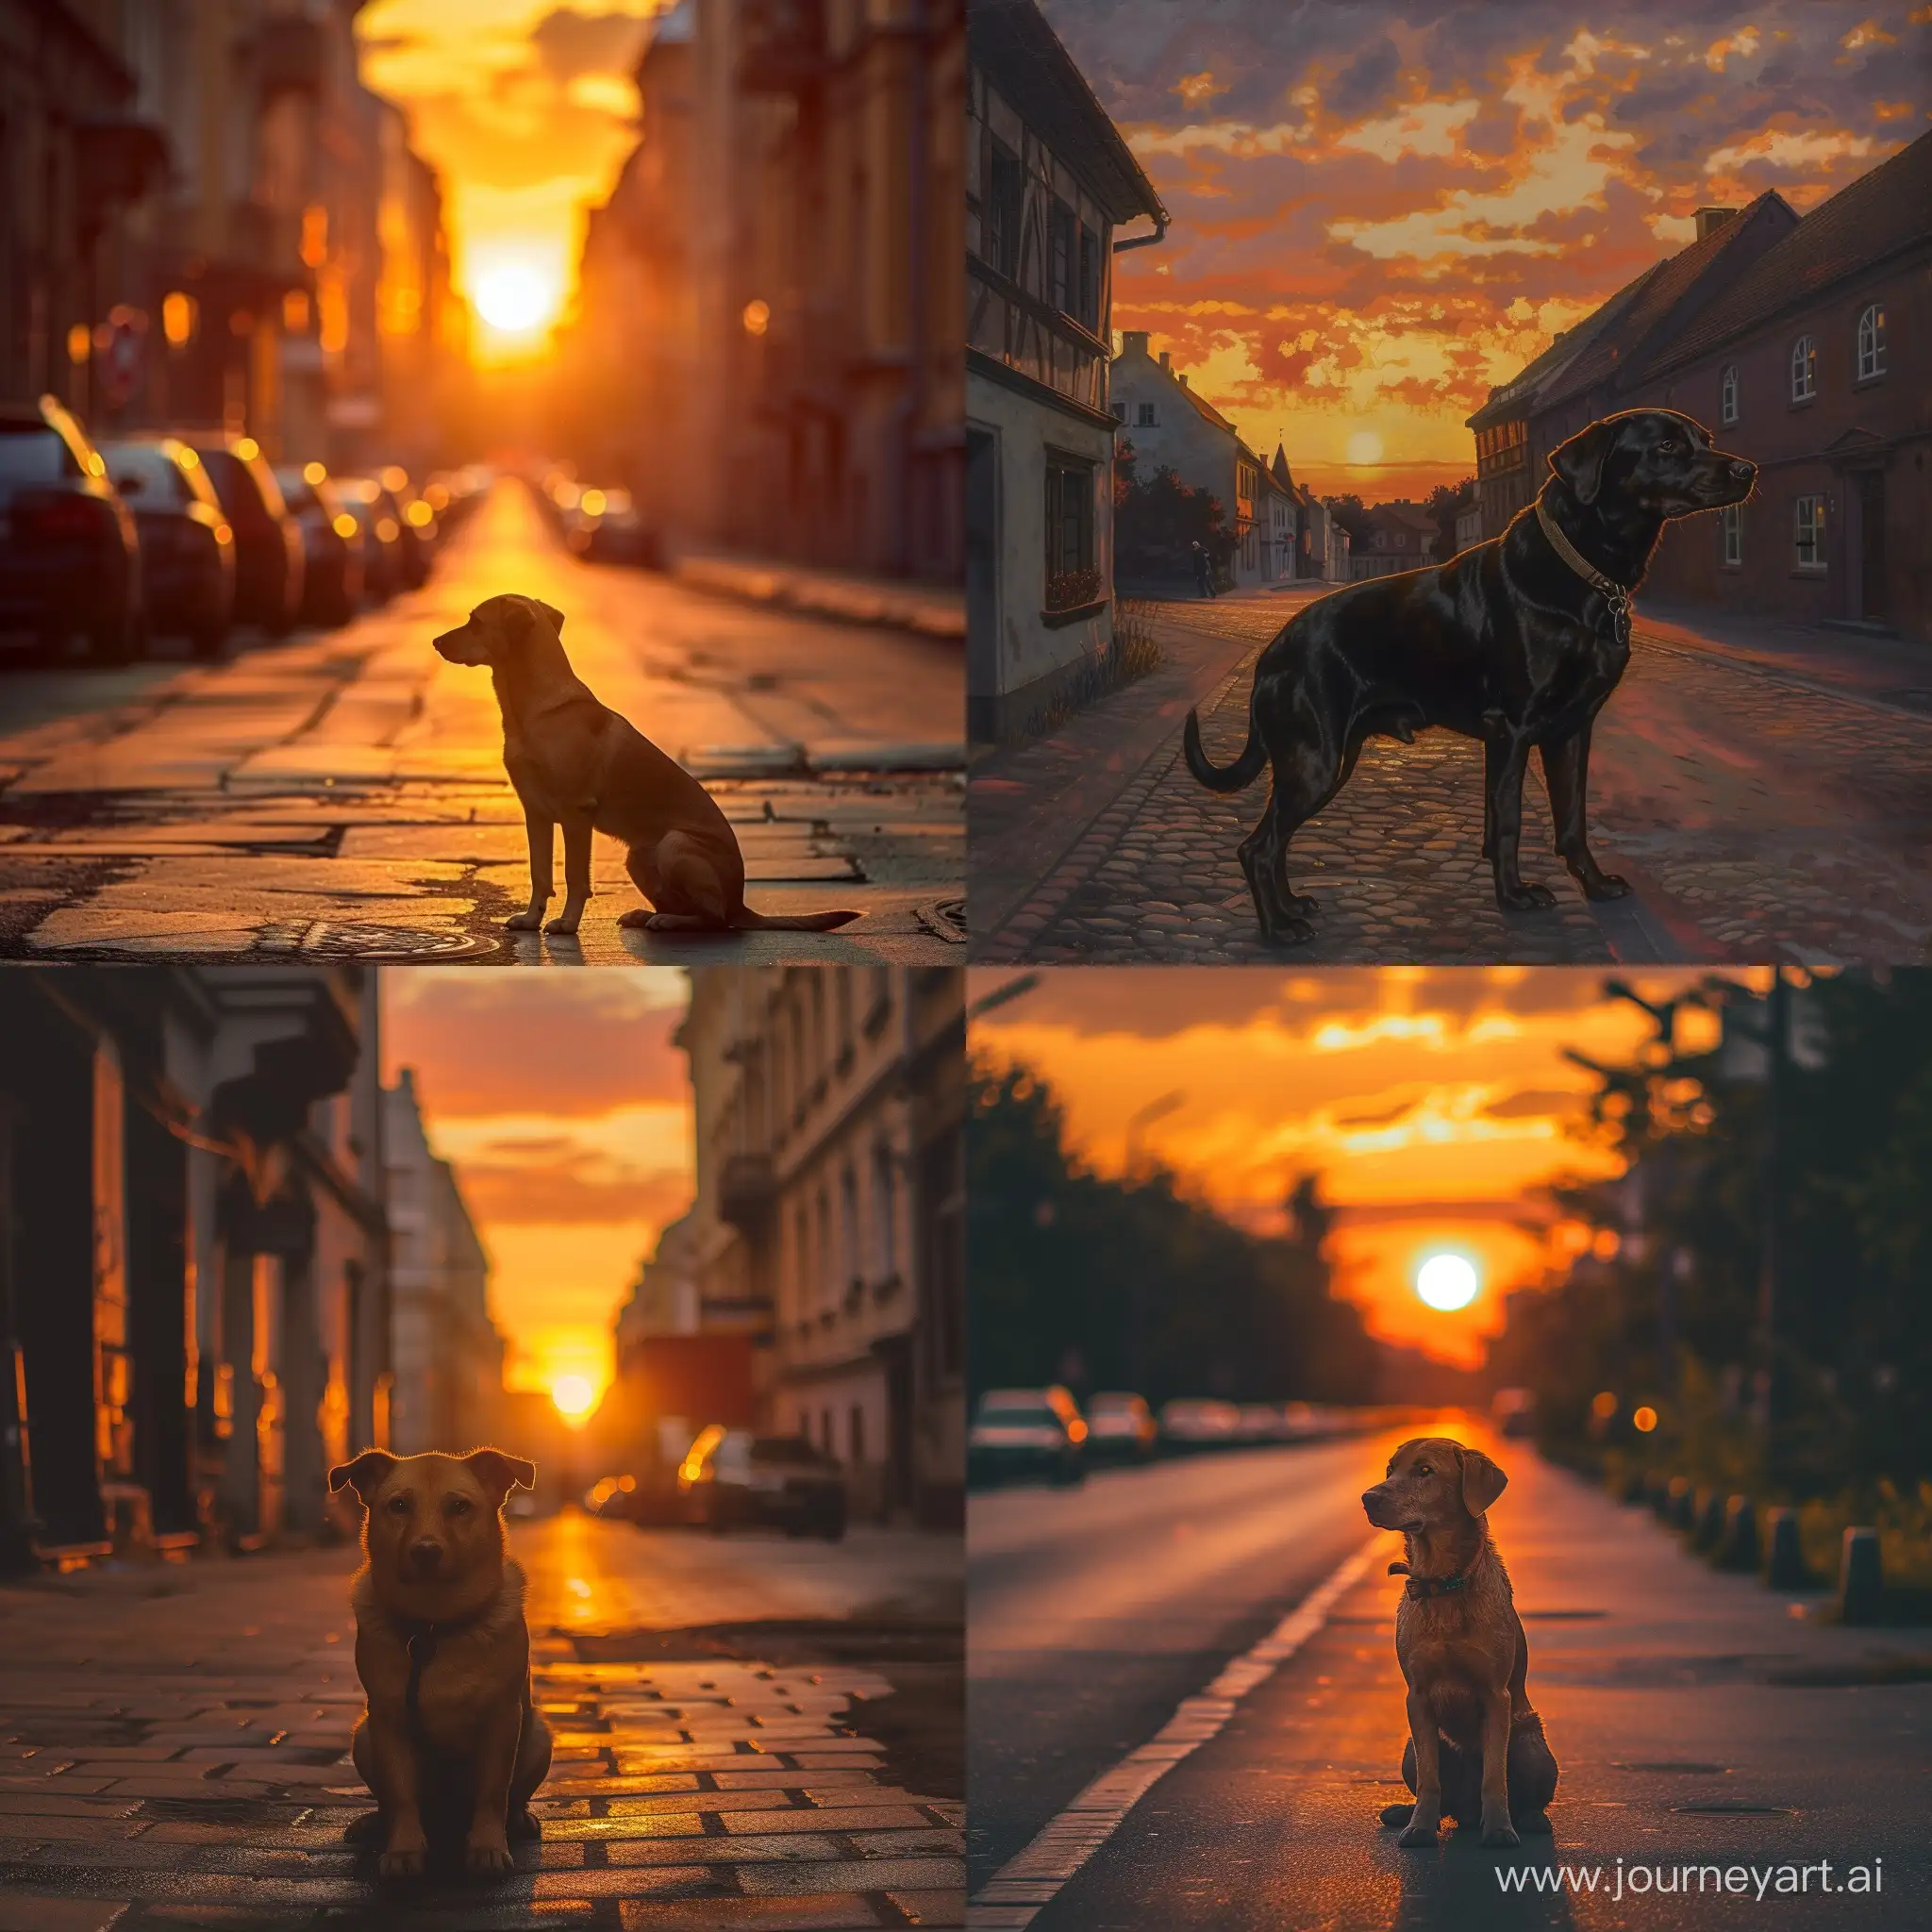 Urban-Dog-at-Sunset-Surrealistic-Street-Scene-in-the-Style-of-Zdzisaw-Beksiski